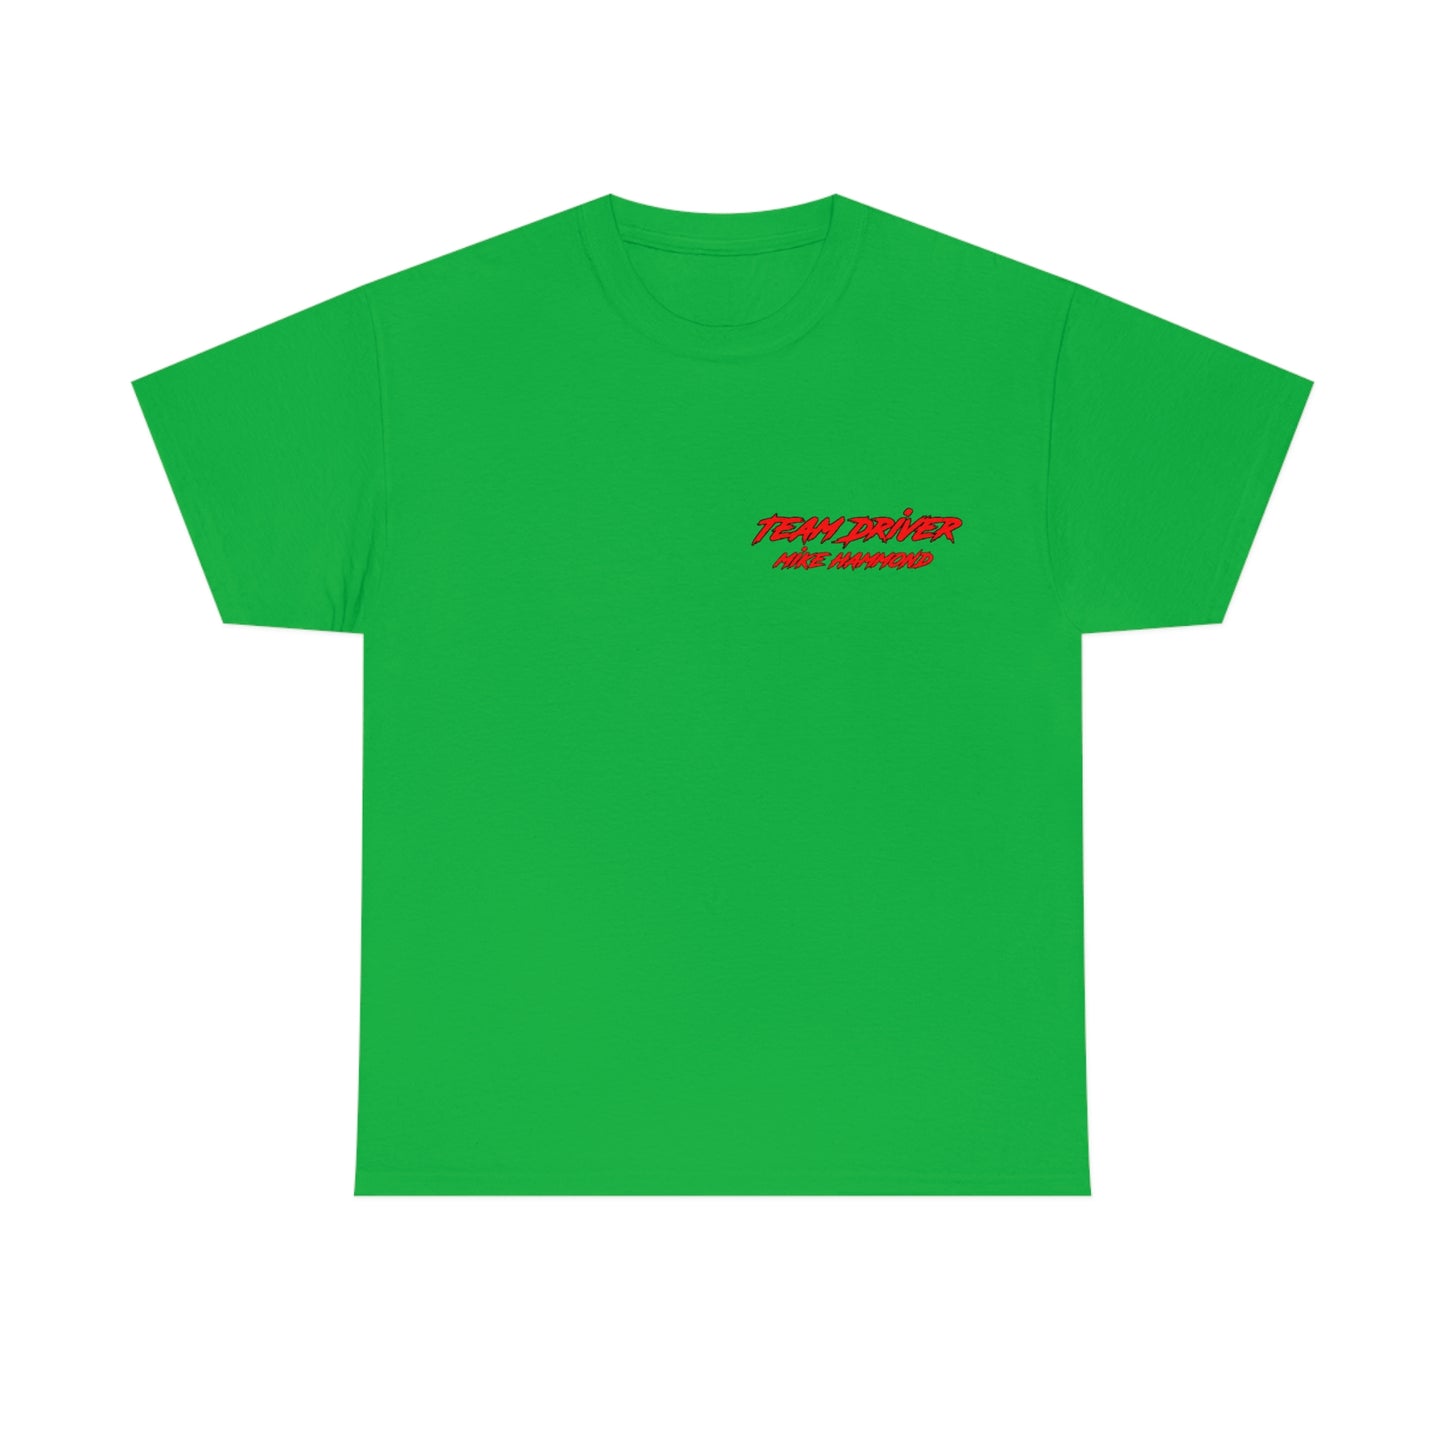 Team Driver Mike Hammond  Front Back DinoRc Logo T-Shirt S-5x Black Green